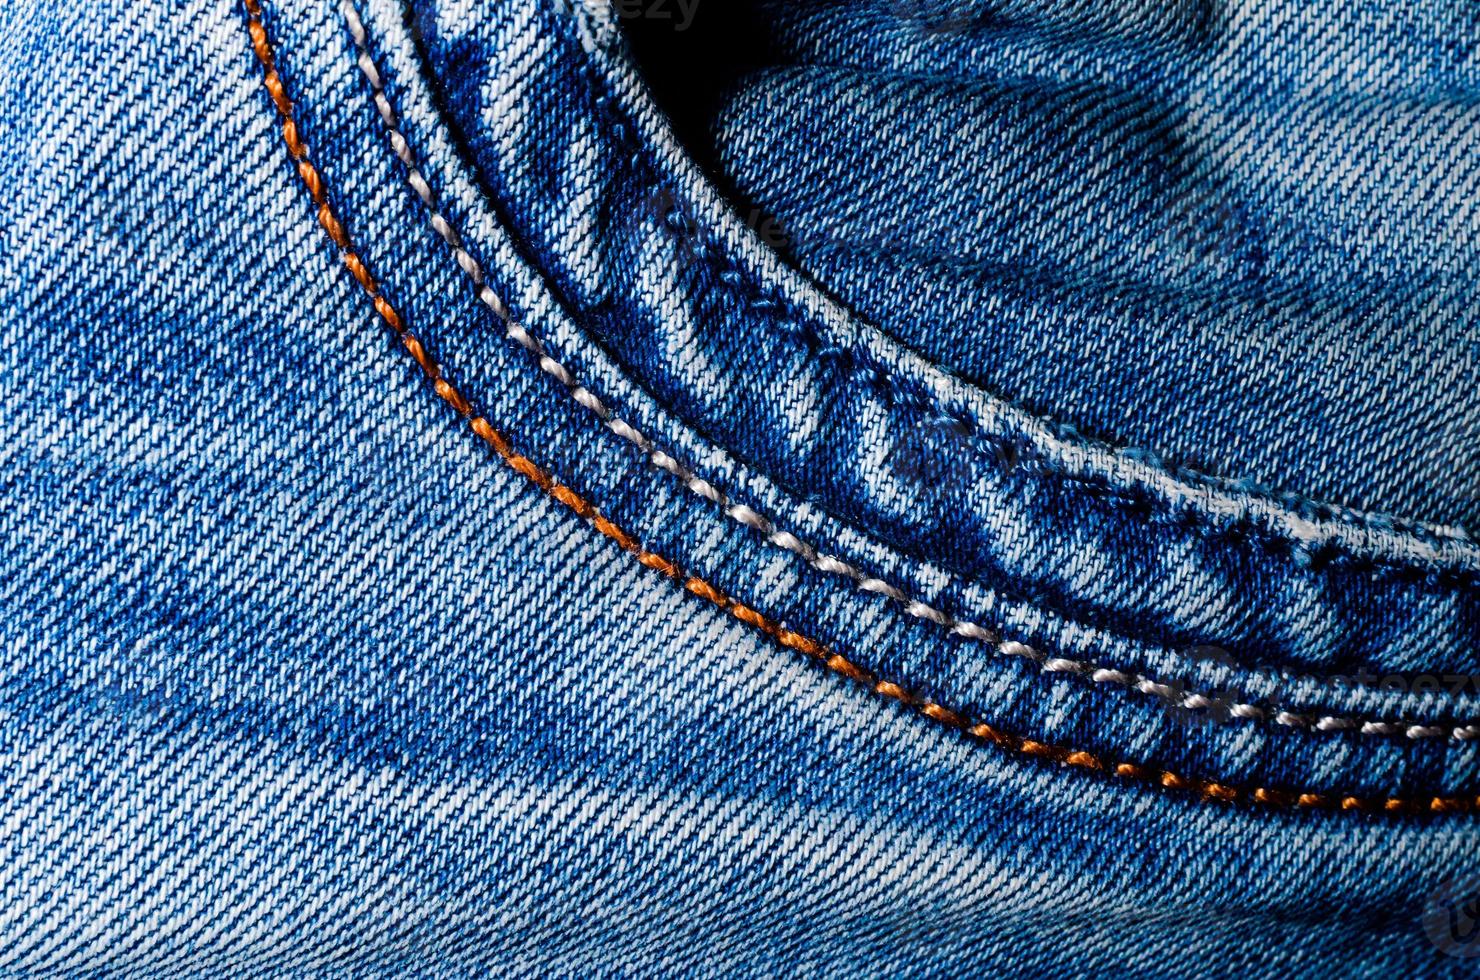 texture pocket of blue crumpled jeans macro closeup photo